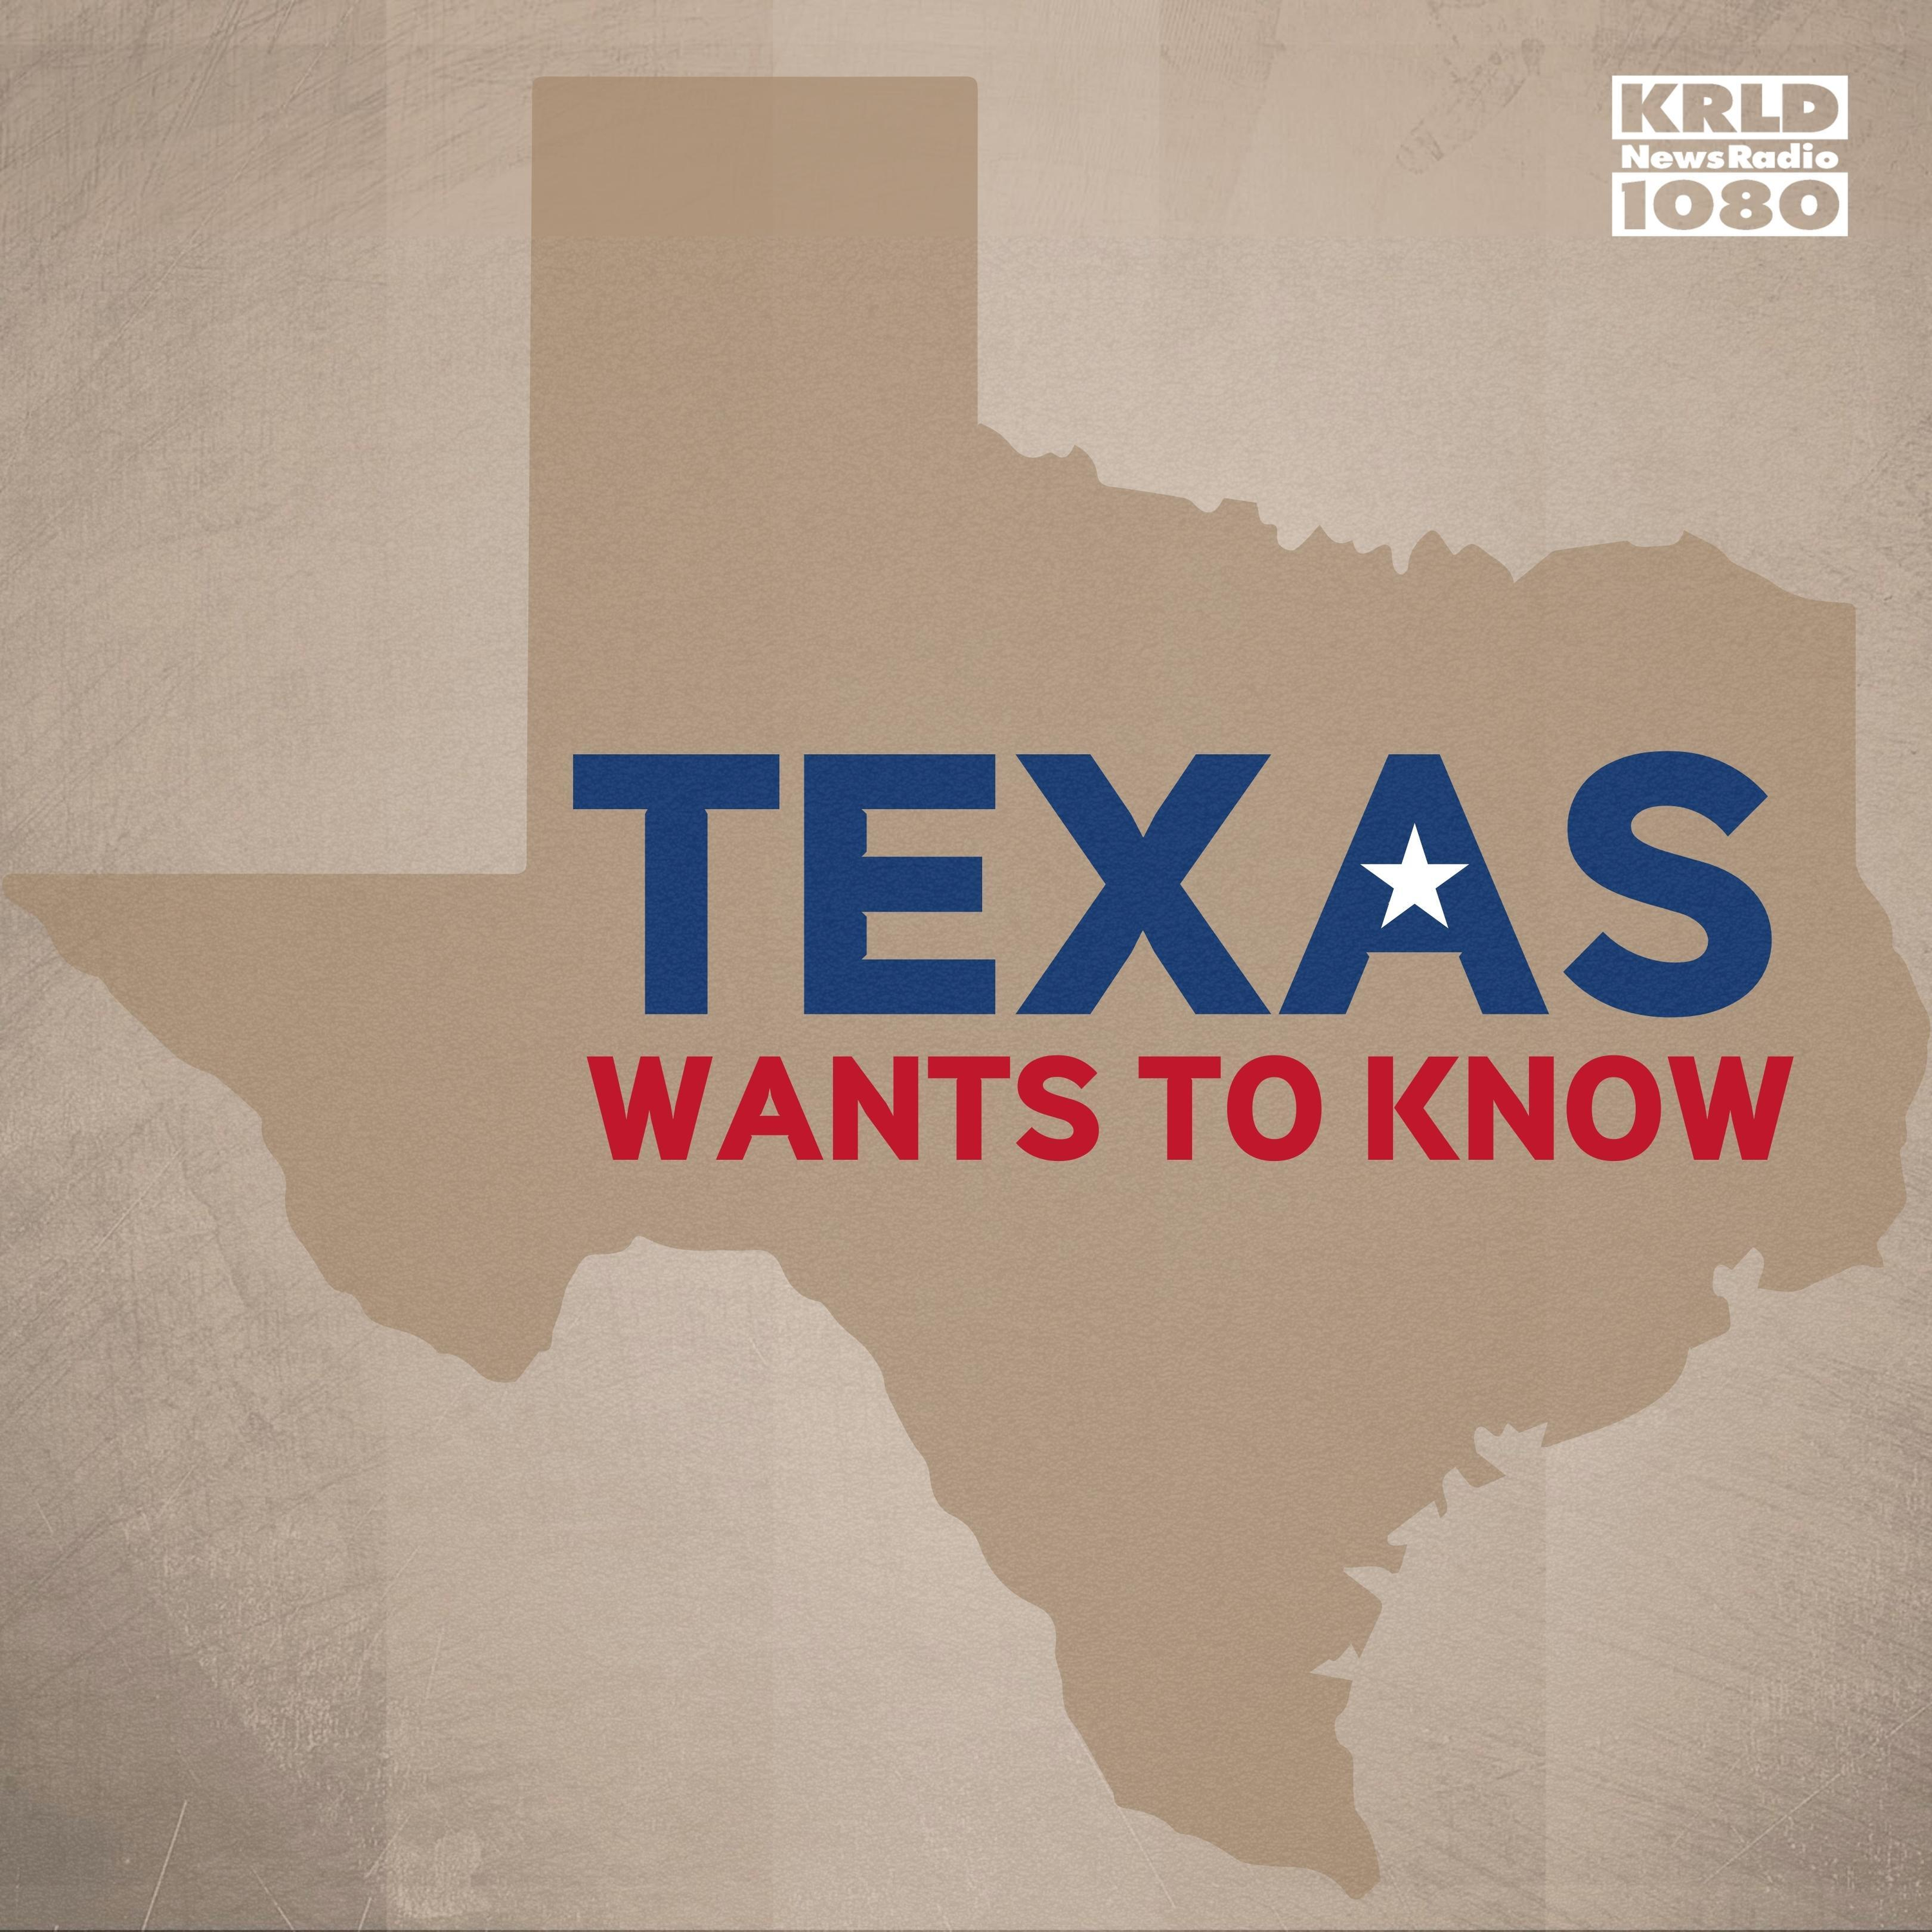 Who's responsible for security along the Texas-Mexico border?